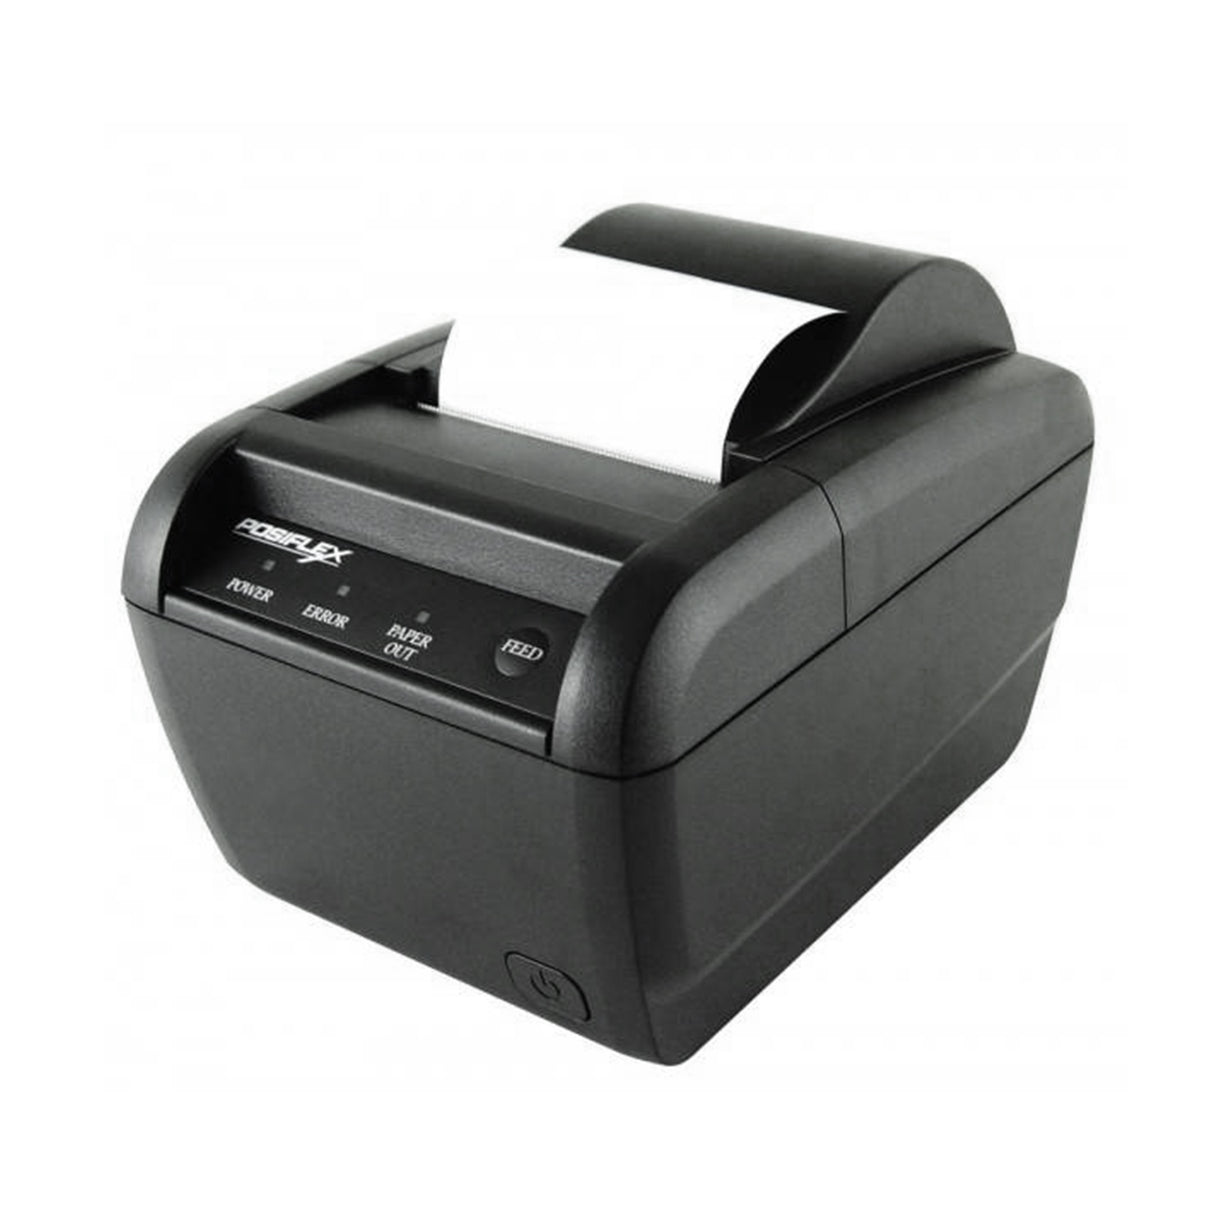 Posiflex PP8000 POS RECEIPT Printer PP-8000B With Power Supply